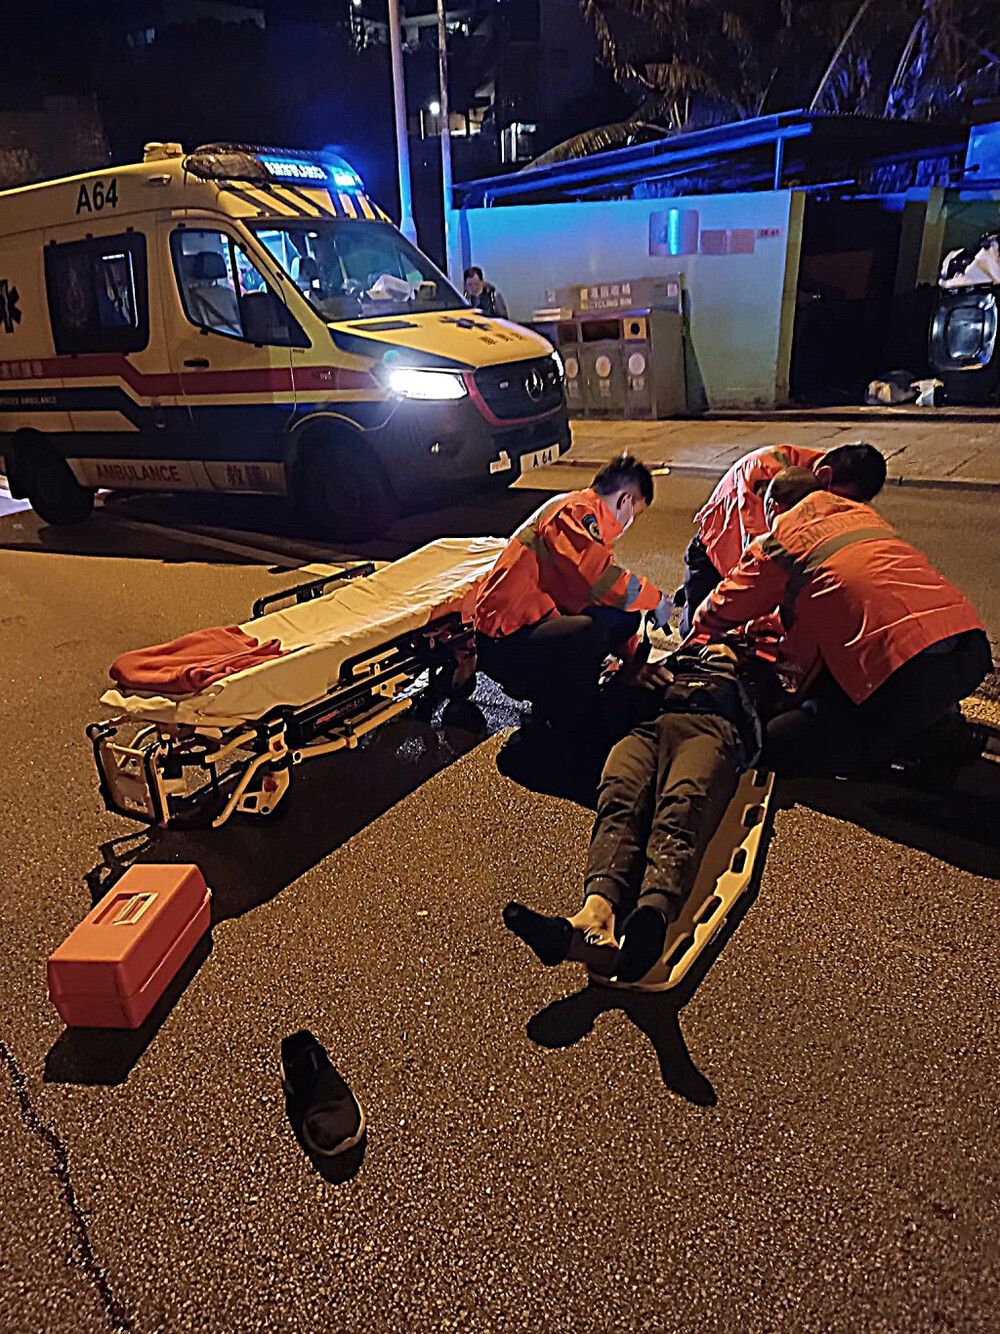 Biker hospitalized after crashing into sedan in Sai Kung